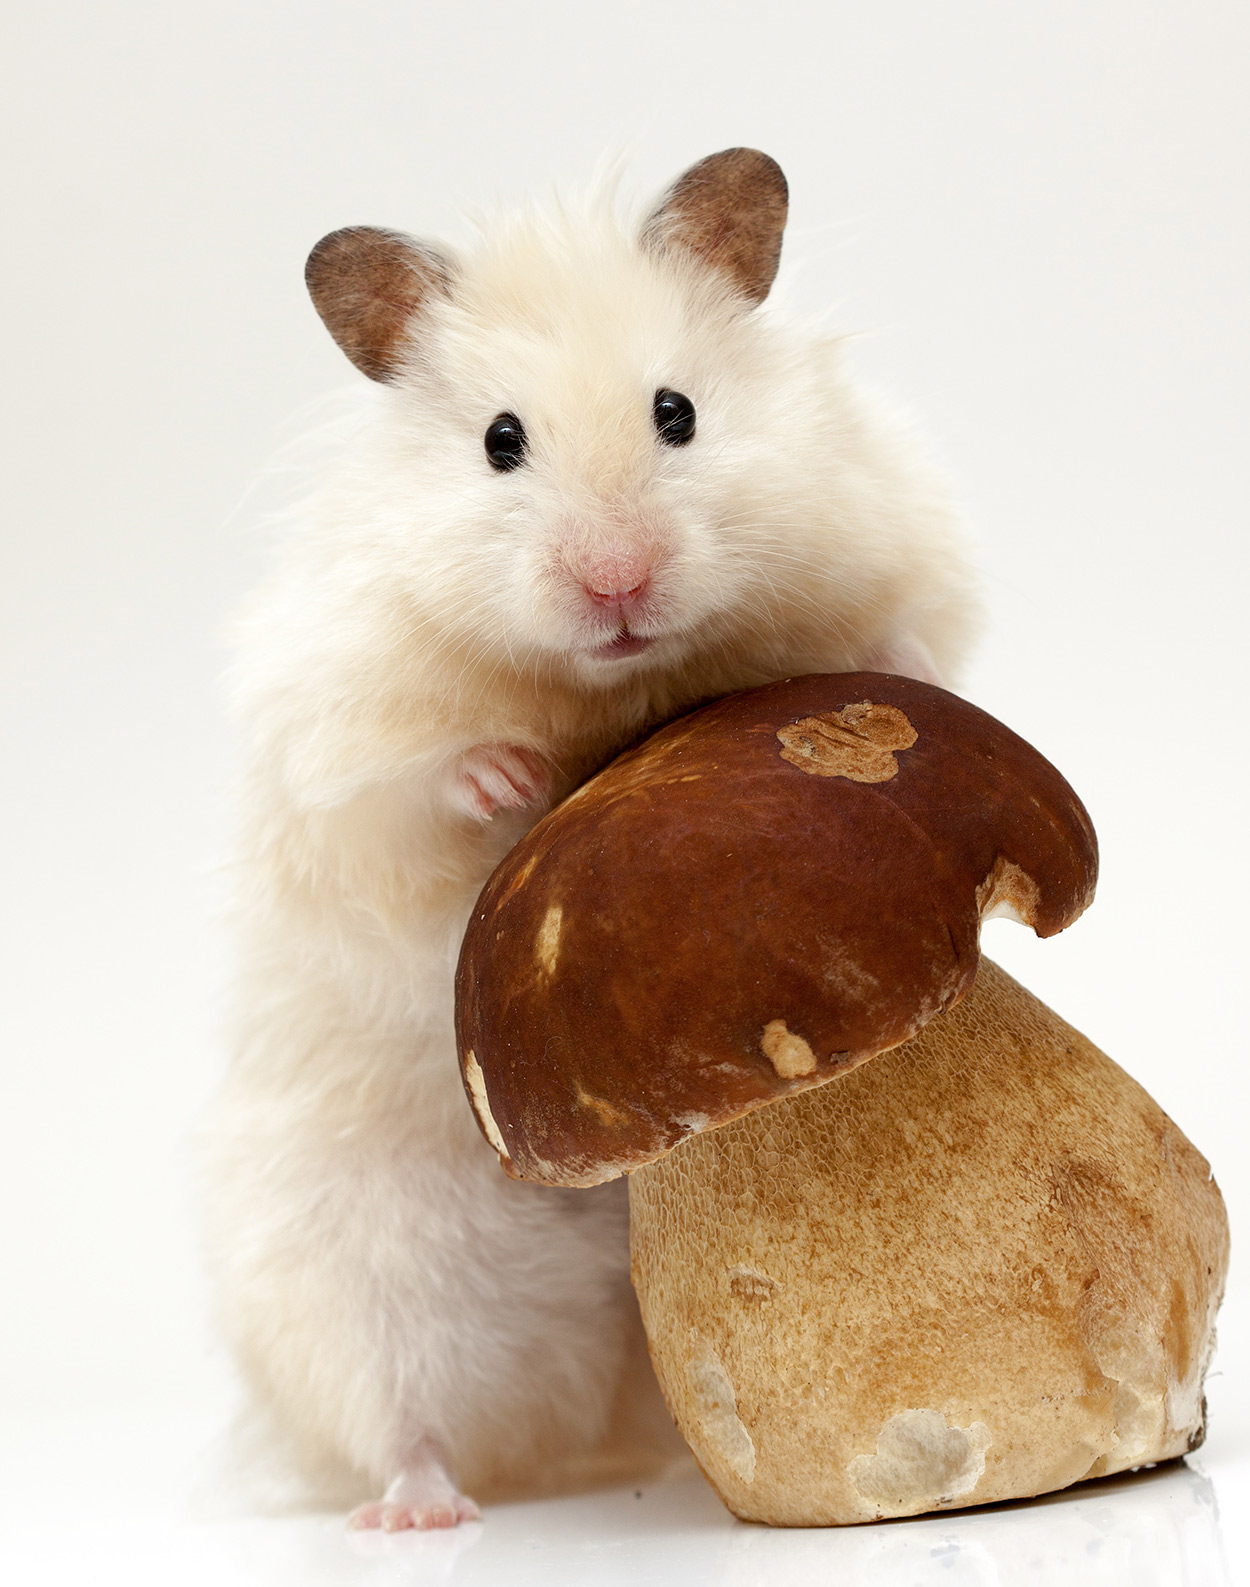 can hamsters eat mushrooms